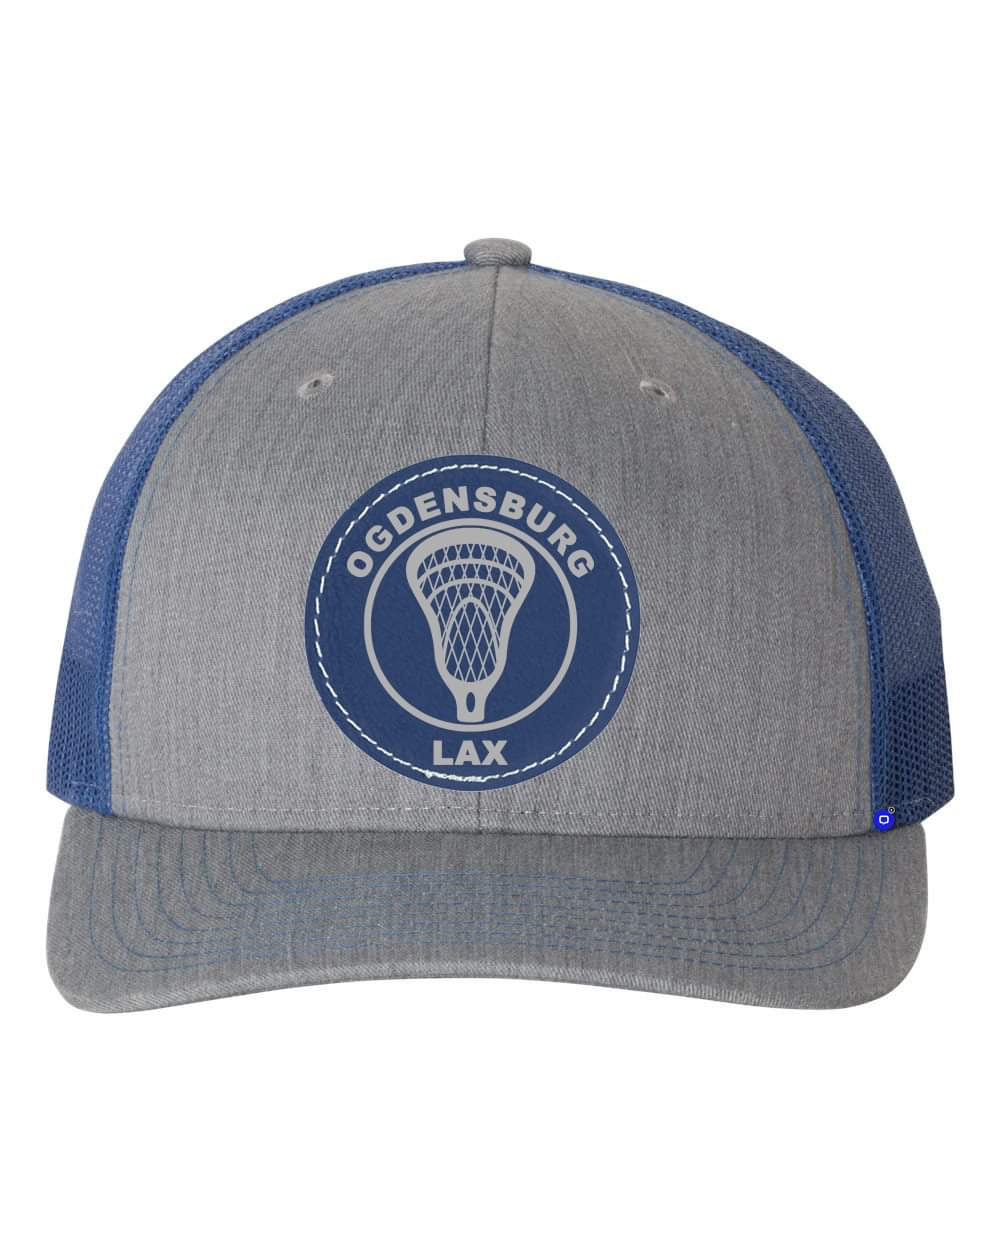 Ogdensburg LAX hat